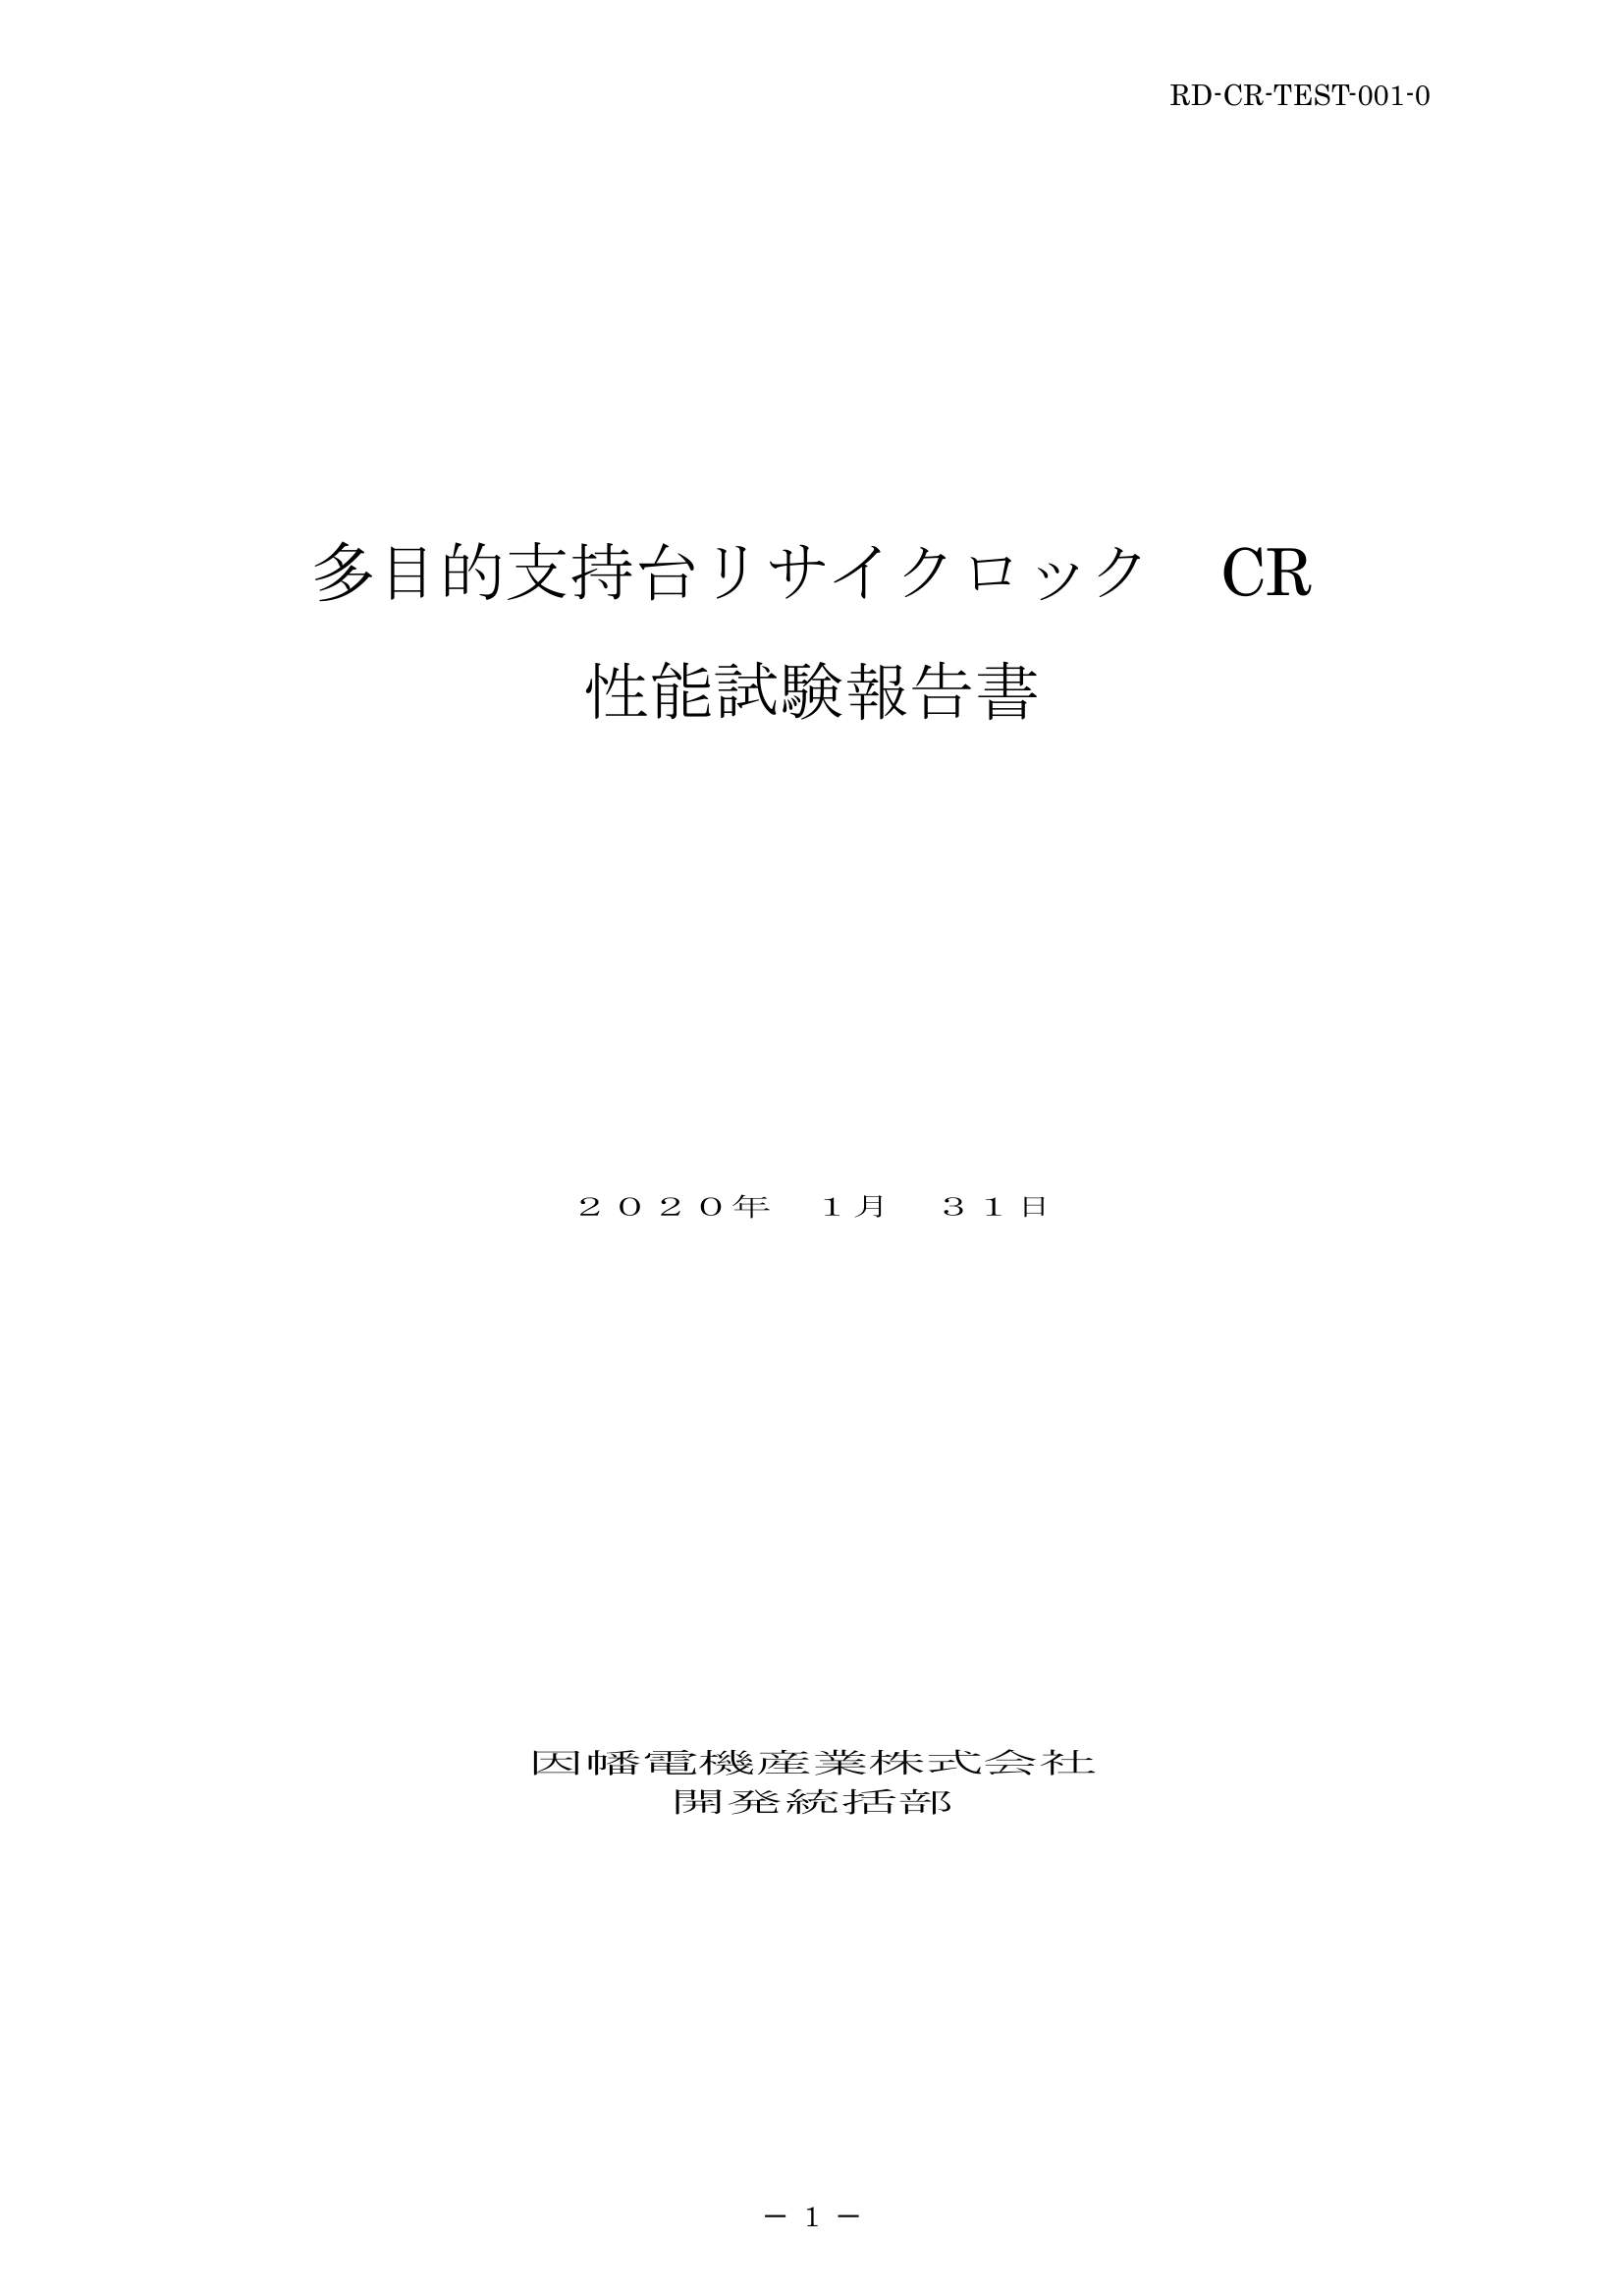 CR_性能試験報告書_20200131.pdf